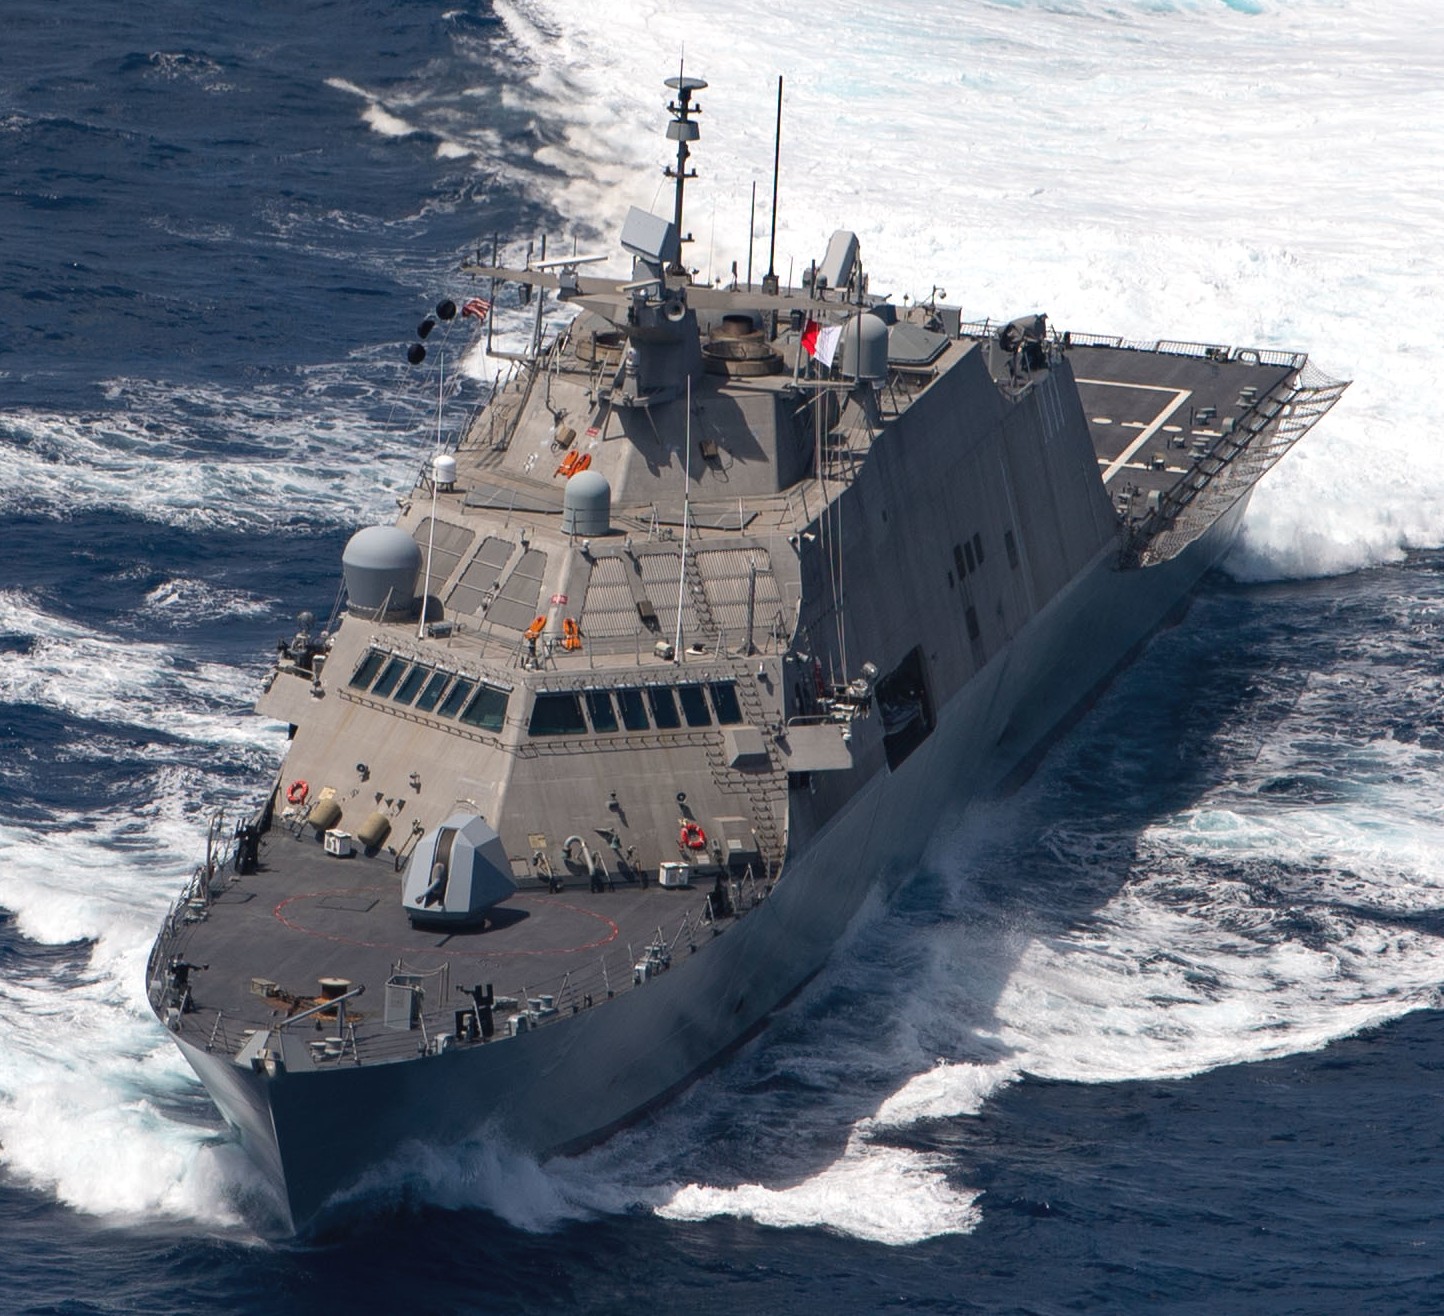 lcs-9 uss little rock freedom class littoral combat ship us navy 41